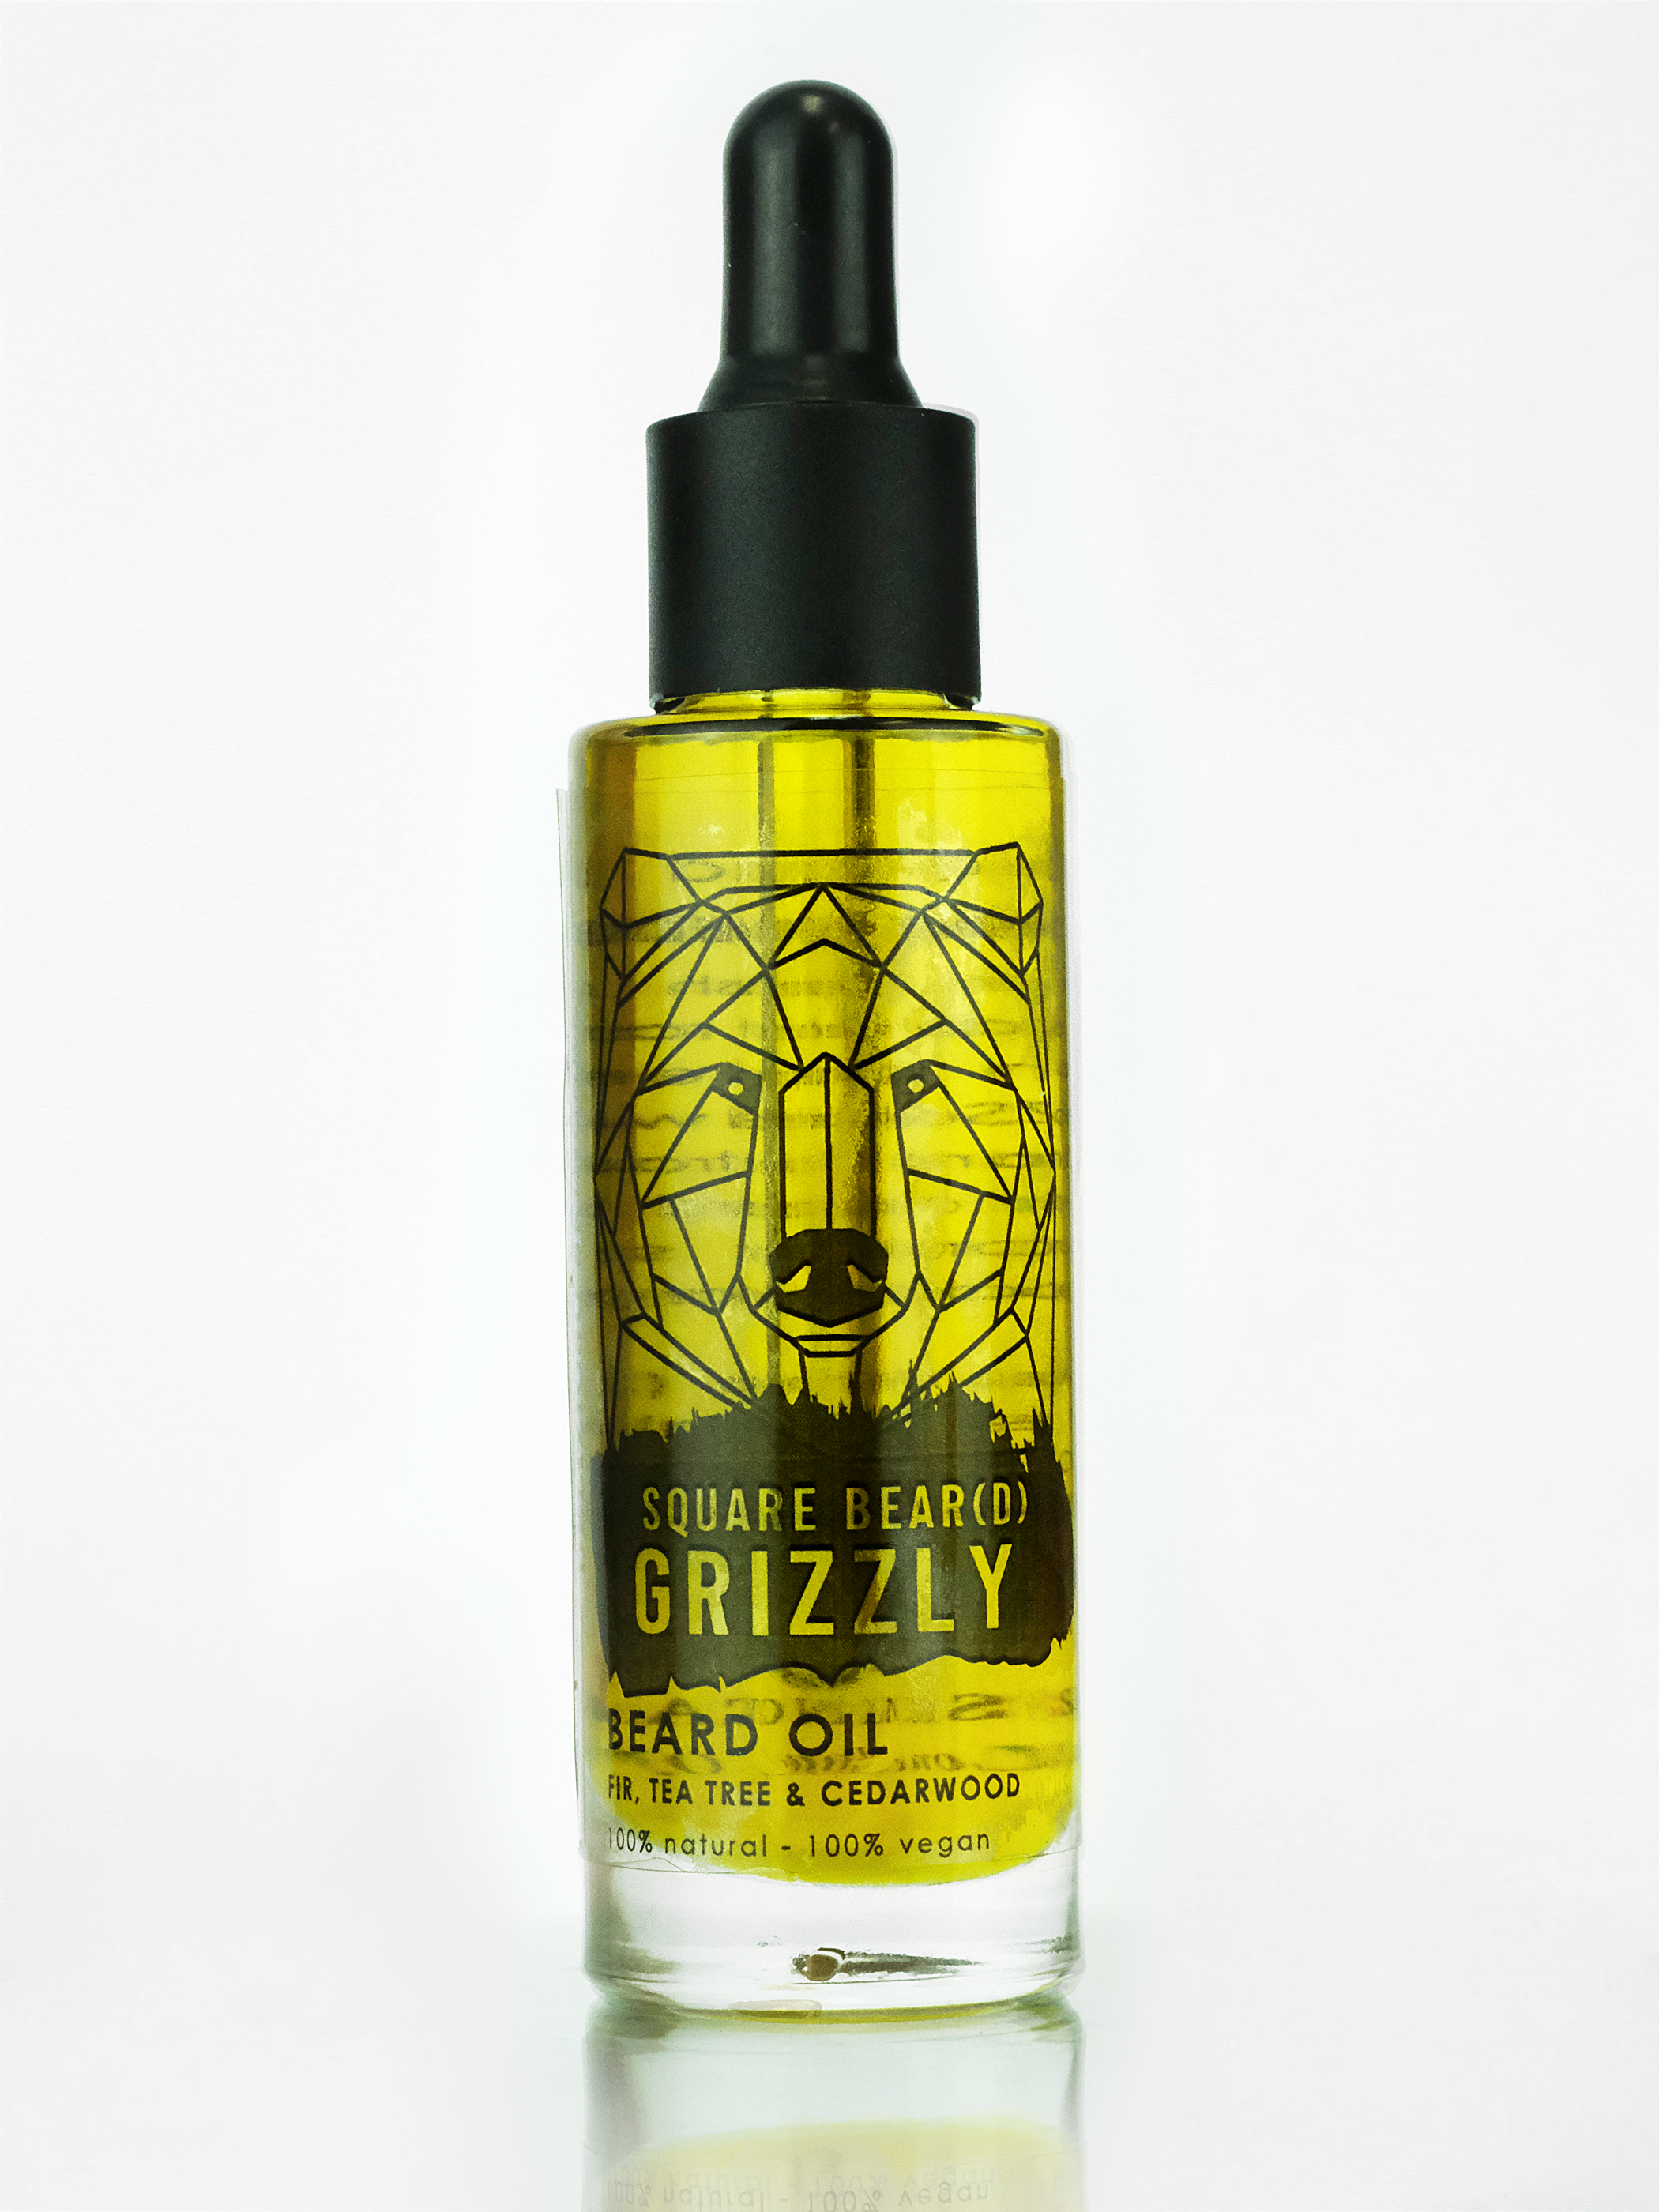 Square Bear(d) Grizzly Fir, Tea Tree & Cedarwood Beard Oil